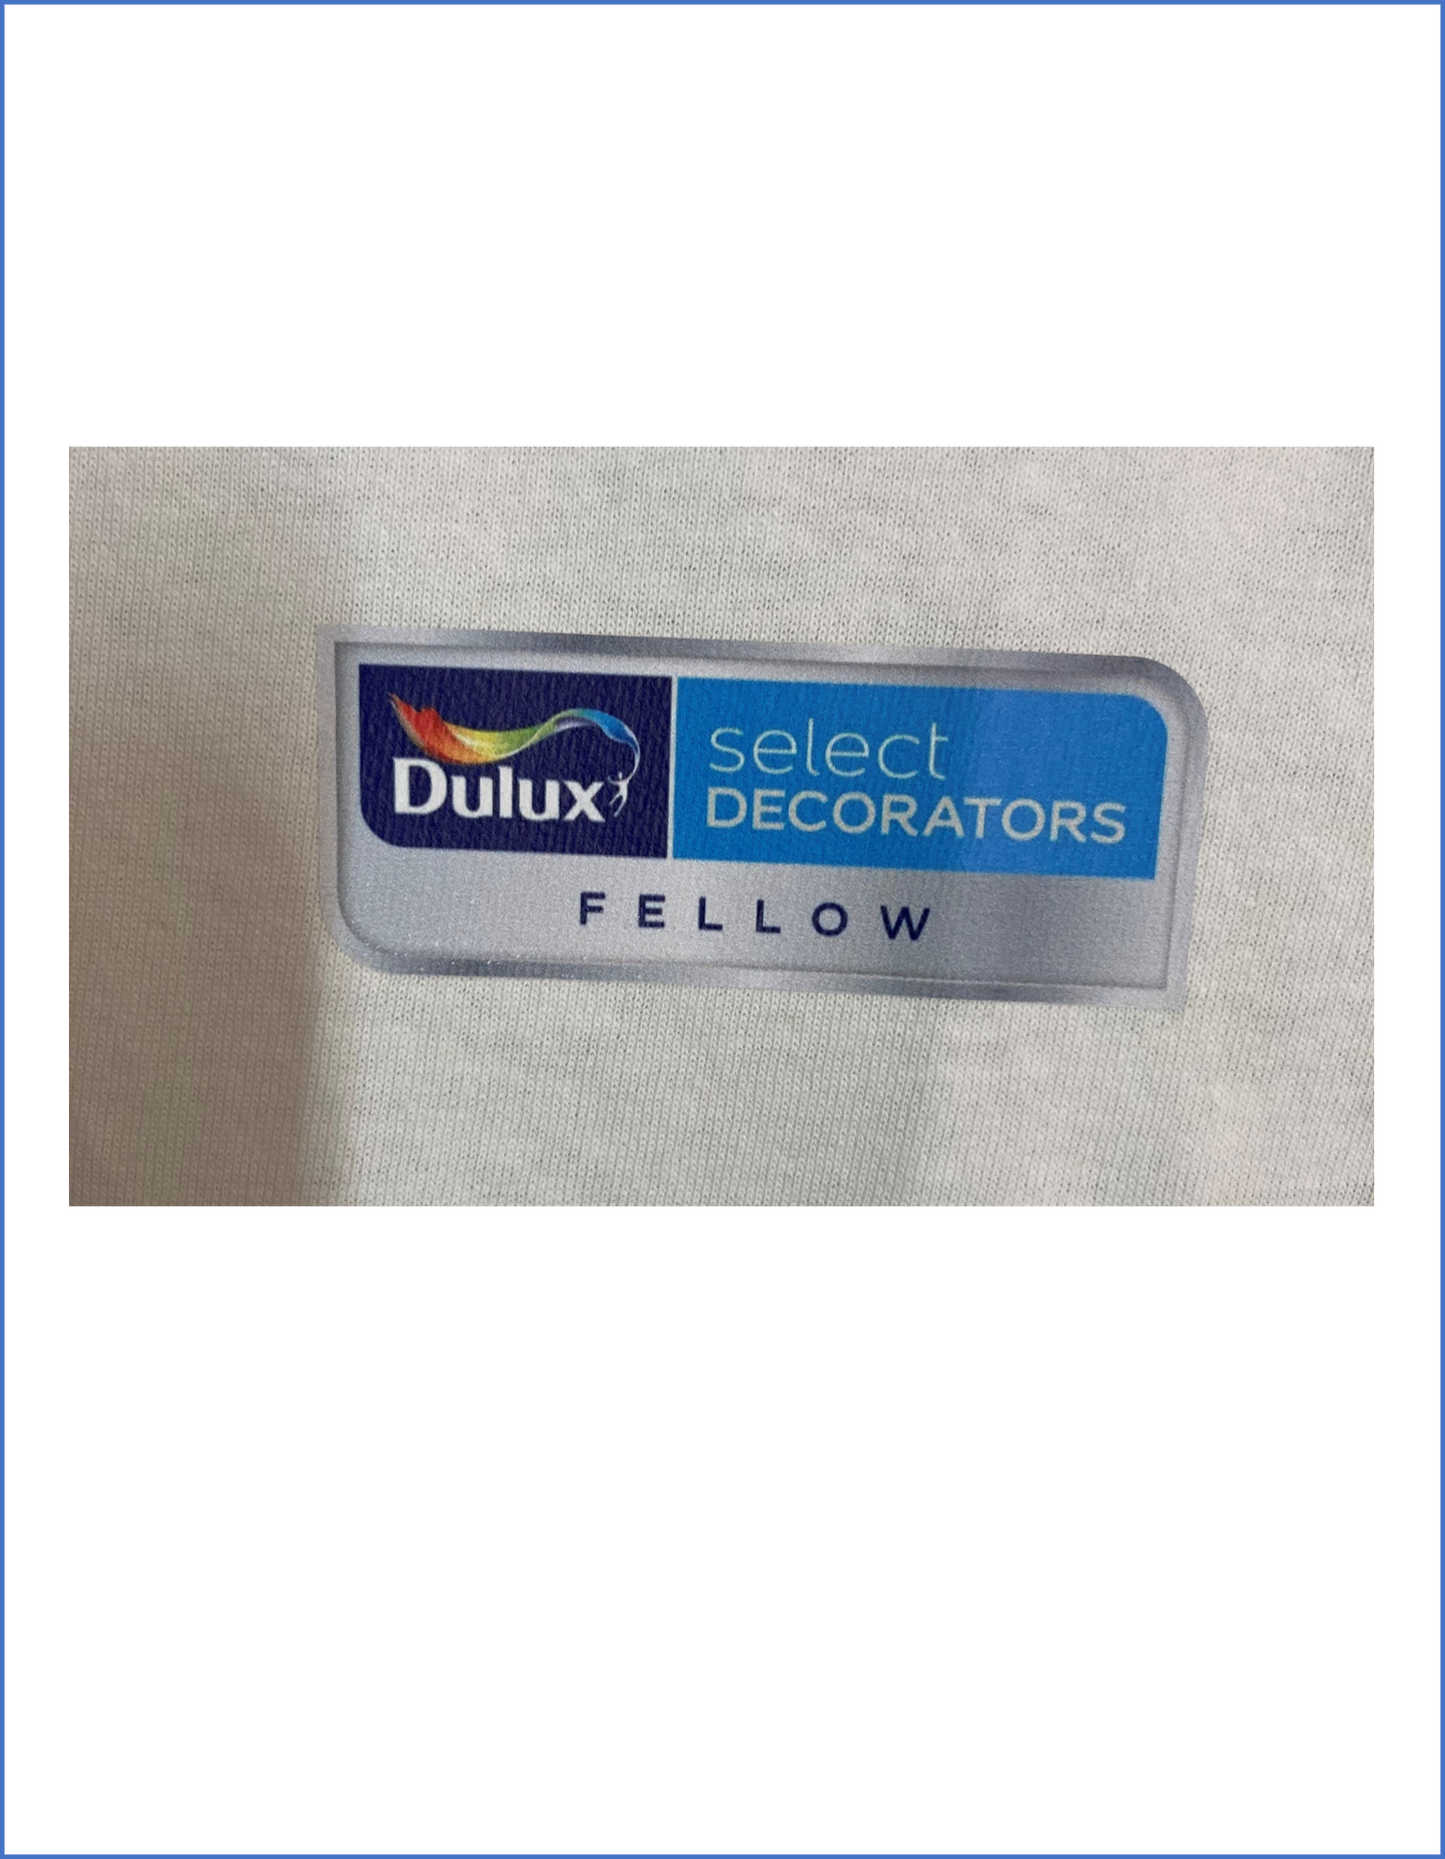 Dulux Select Decorators Fellows  T Shirt